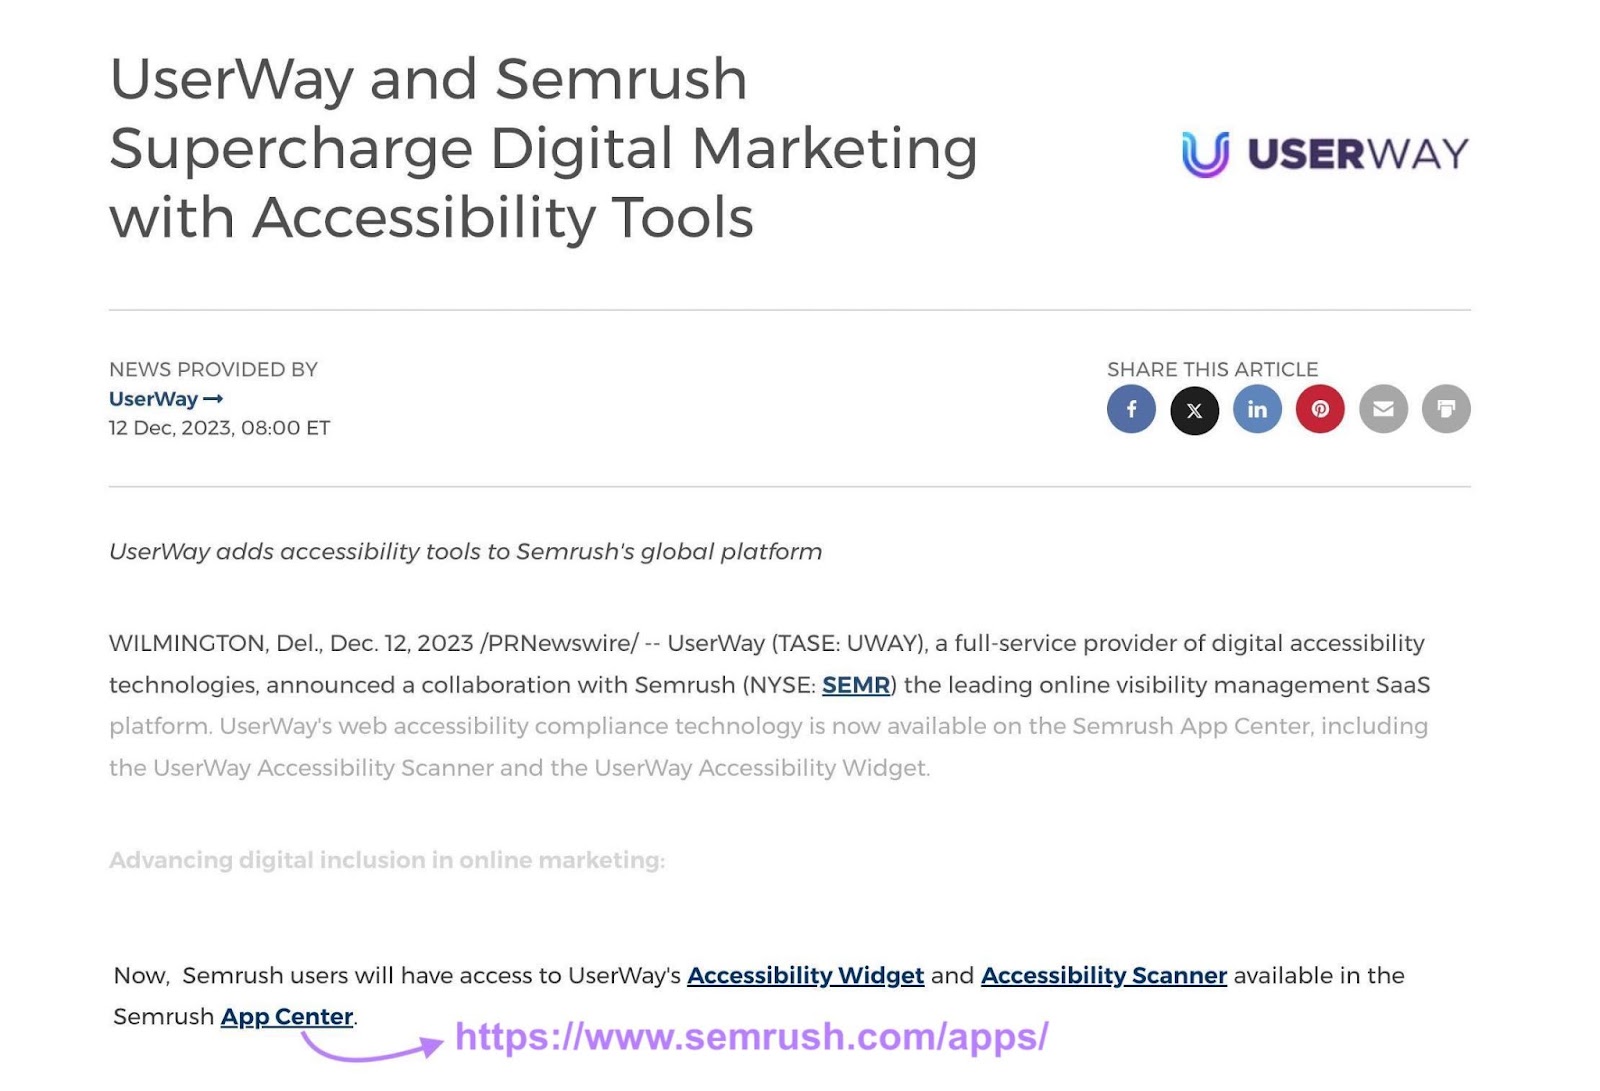 UserWay's backlink to Semrush app center